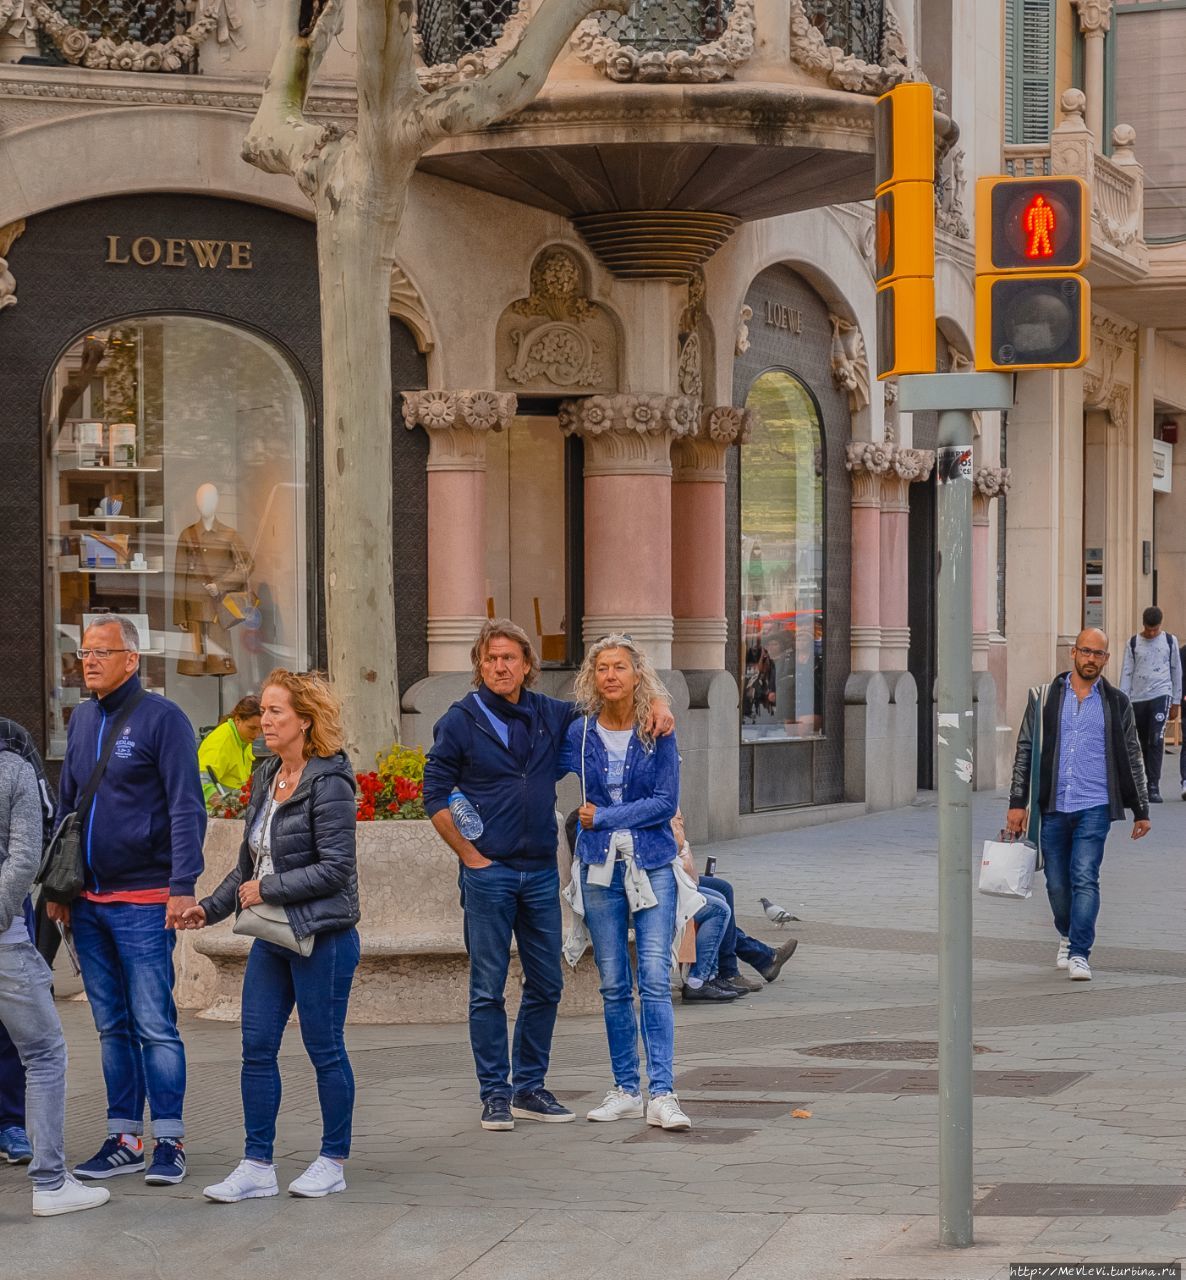 Люди на улице. Весенняя Барселона Барселона, Испания